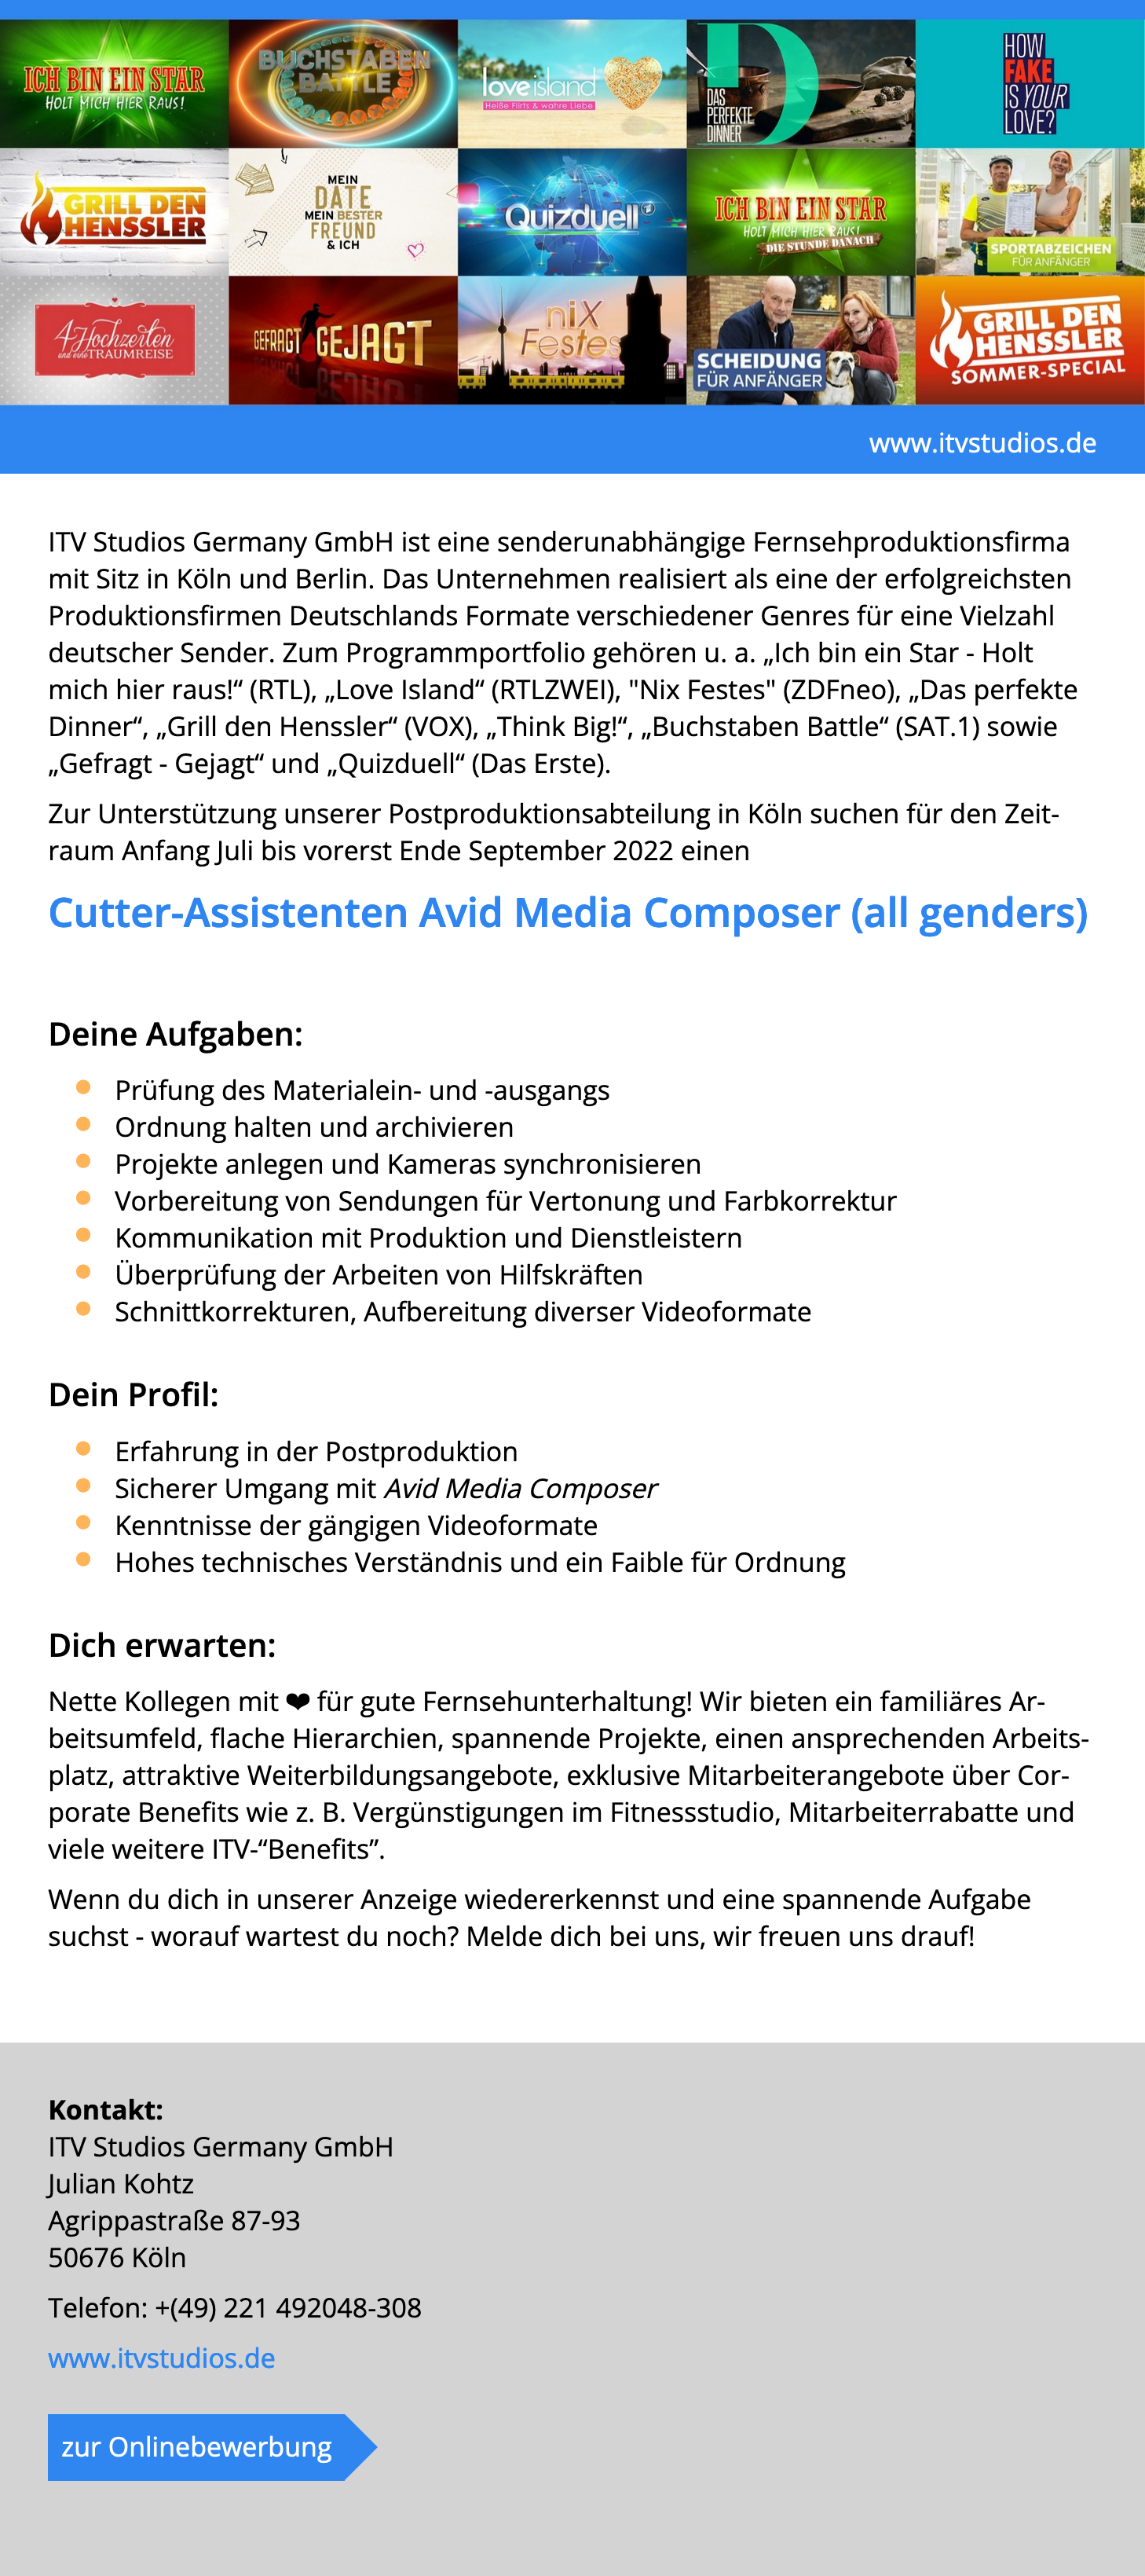 Cutter-Assistent Avid Media Composer (all genders)